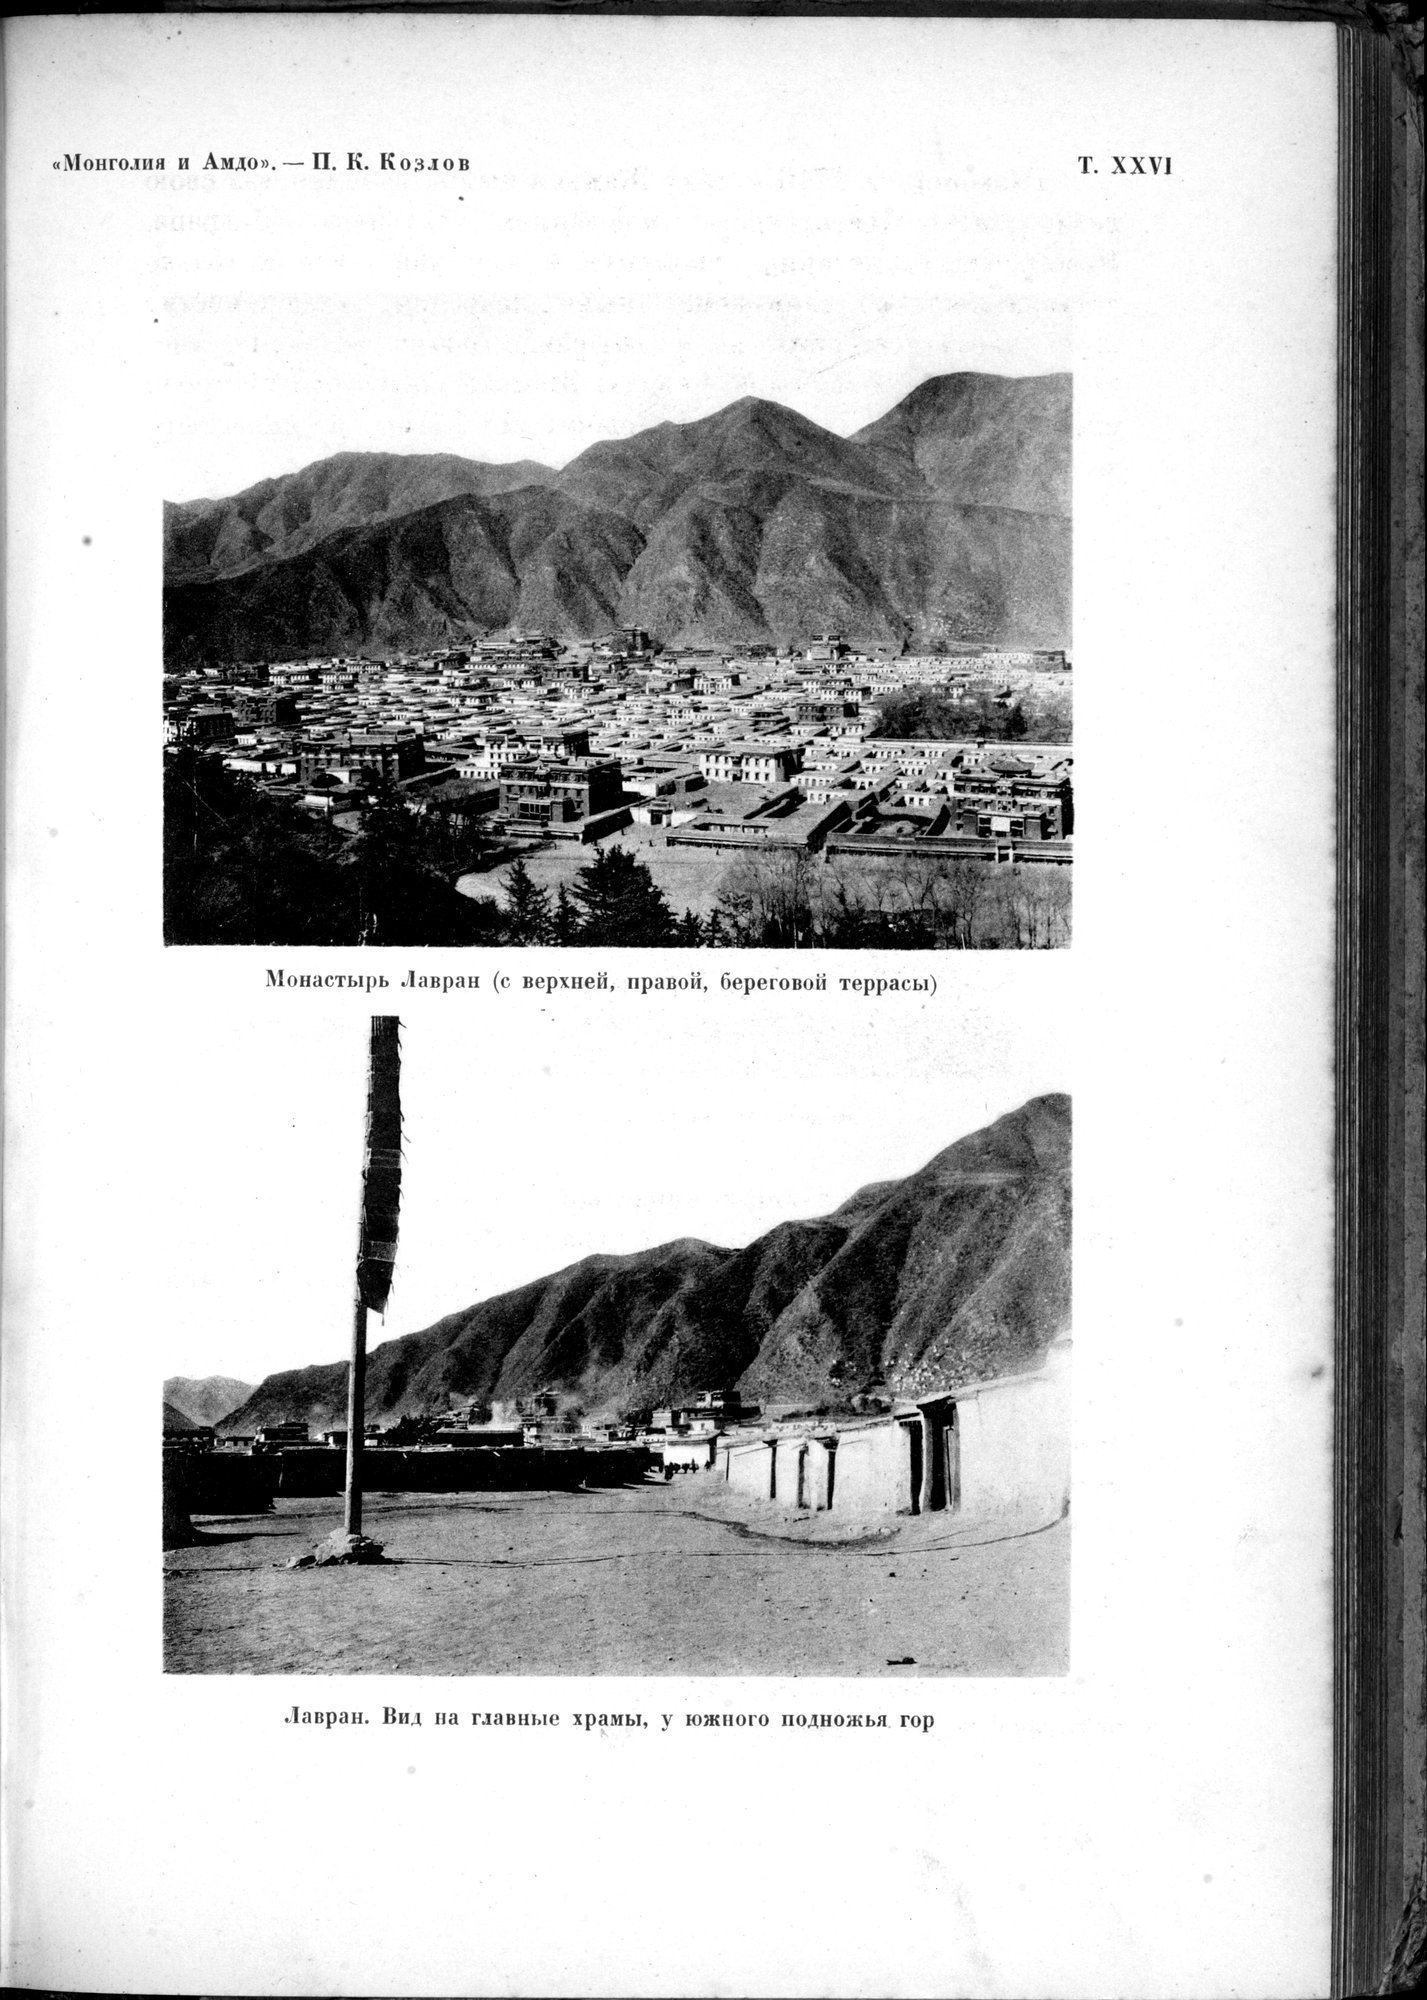 Mongoliya i Amdo i mertby gorod Khara-Khoto : vol.1 / Page 517 (Grayscale High Resolution Image)